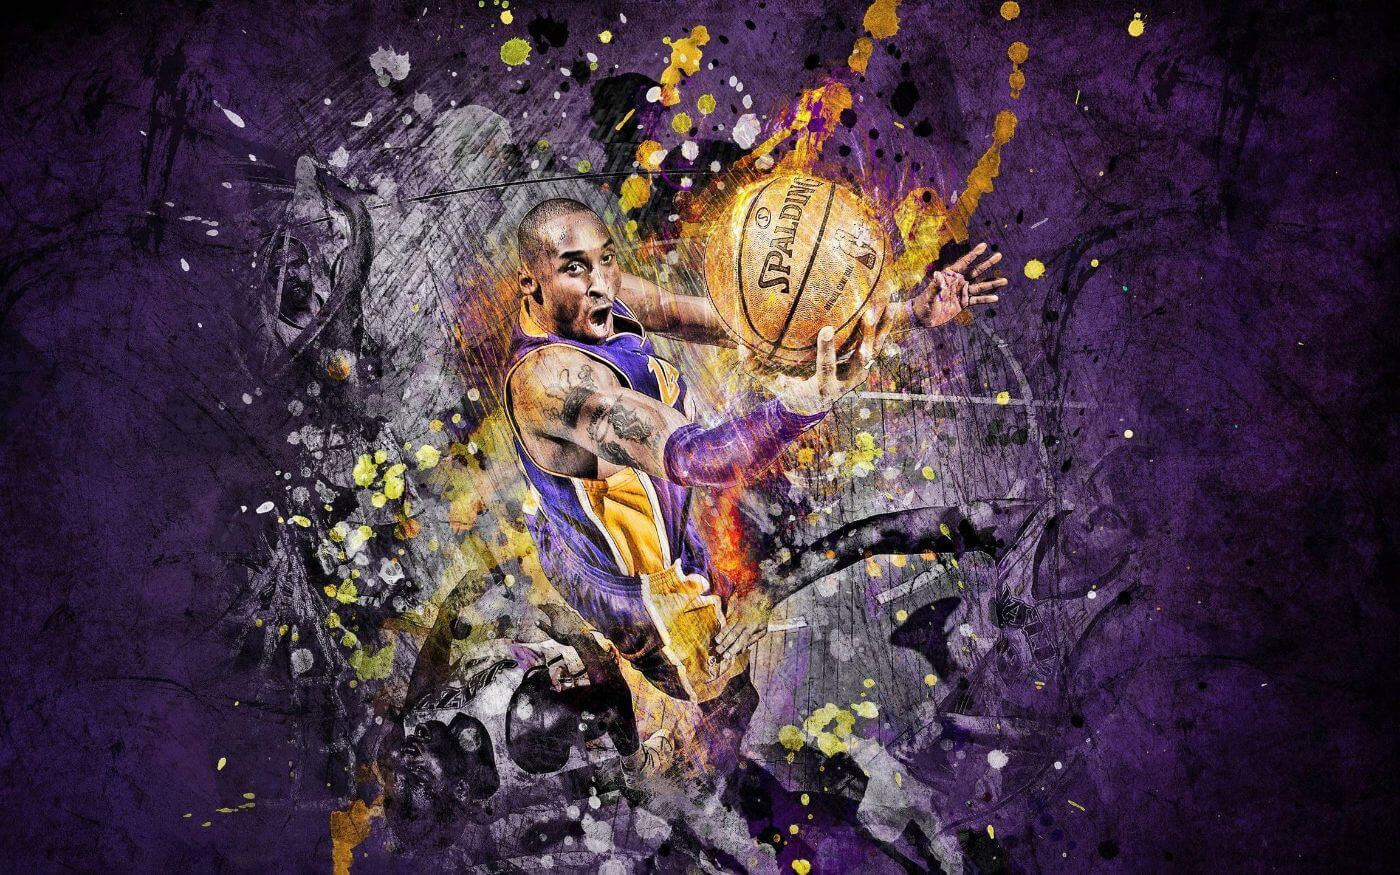 Kobe Bryant Painting Los Angeles Lakers Wall Art Abstract 